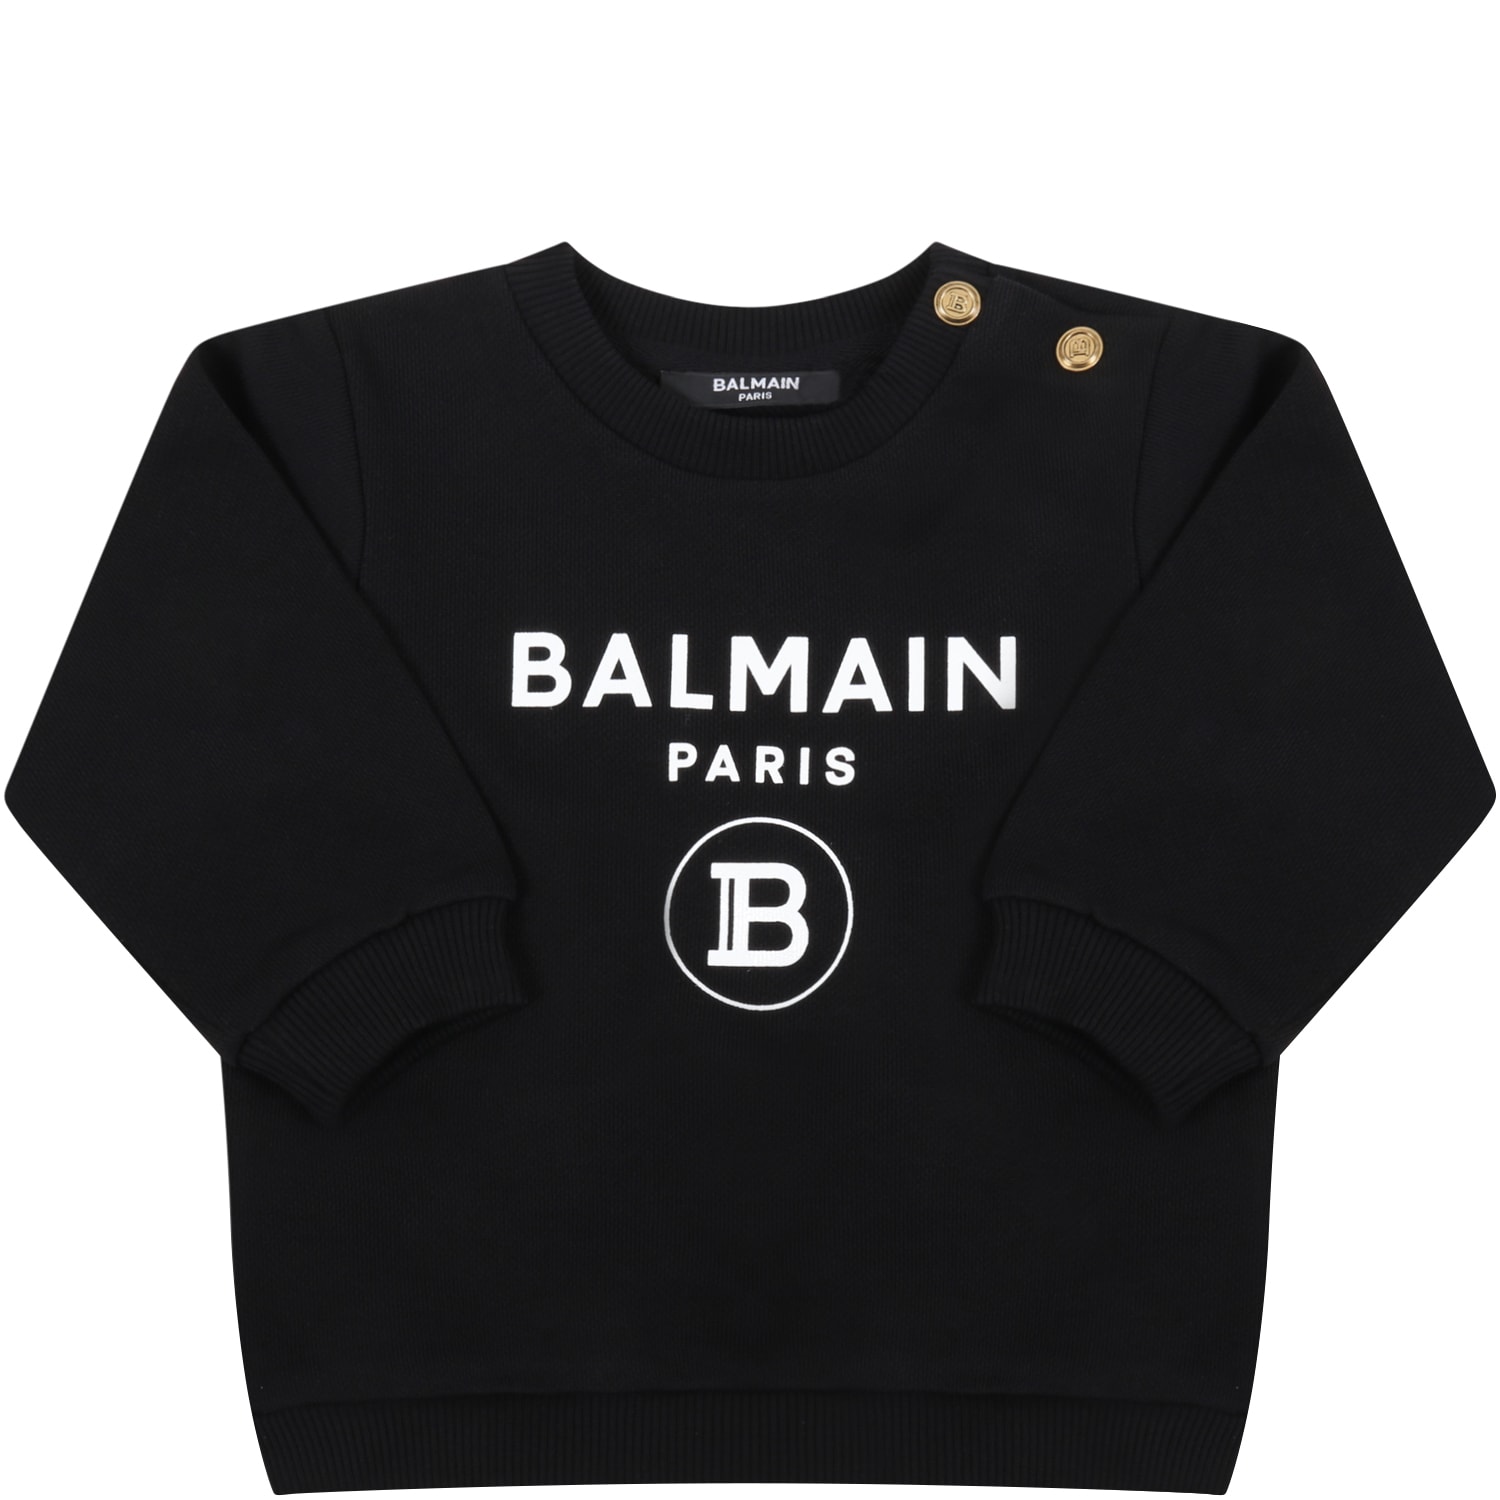 Balmain Black Sweatshirt For Babykids With Logos